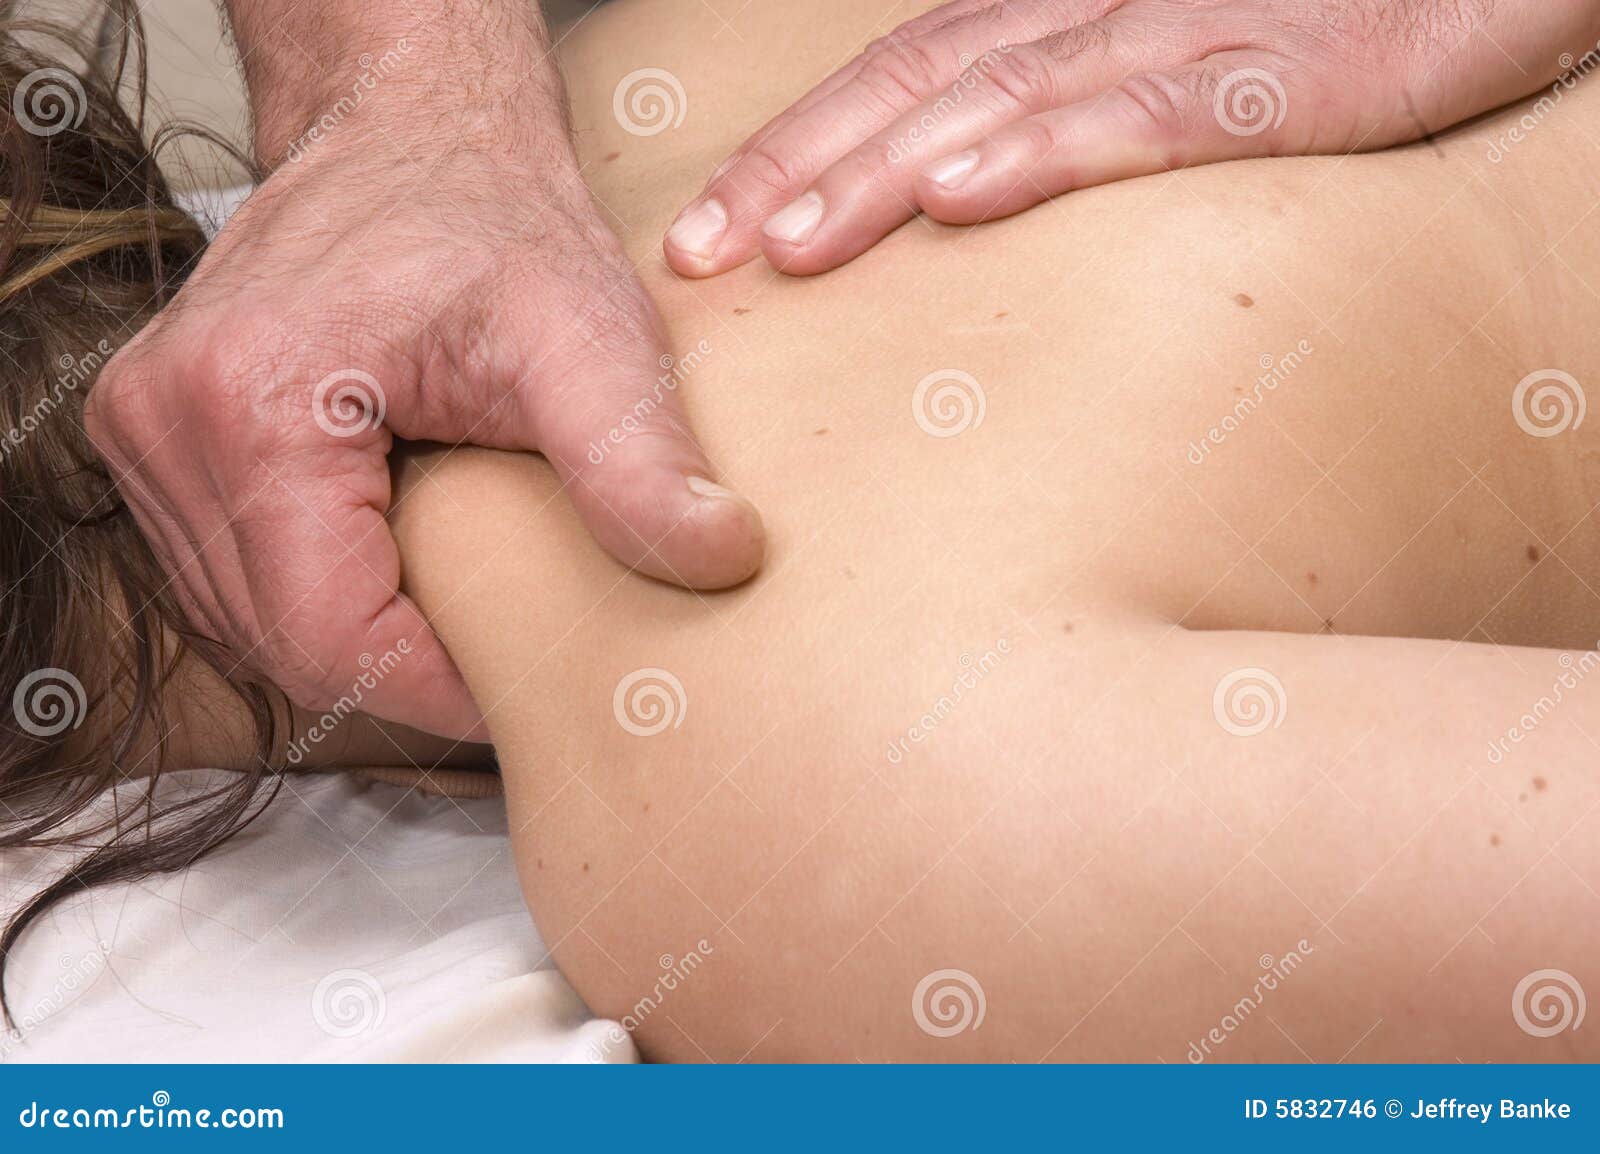 woman having deep tissue massage